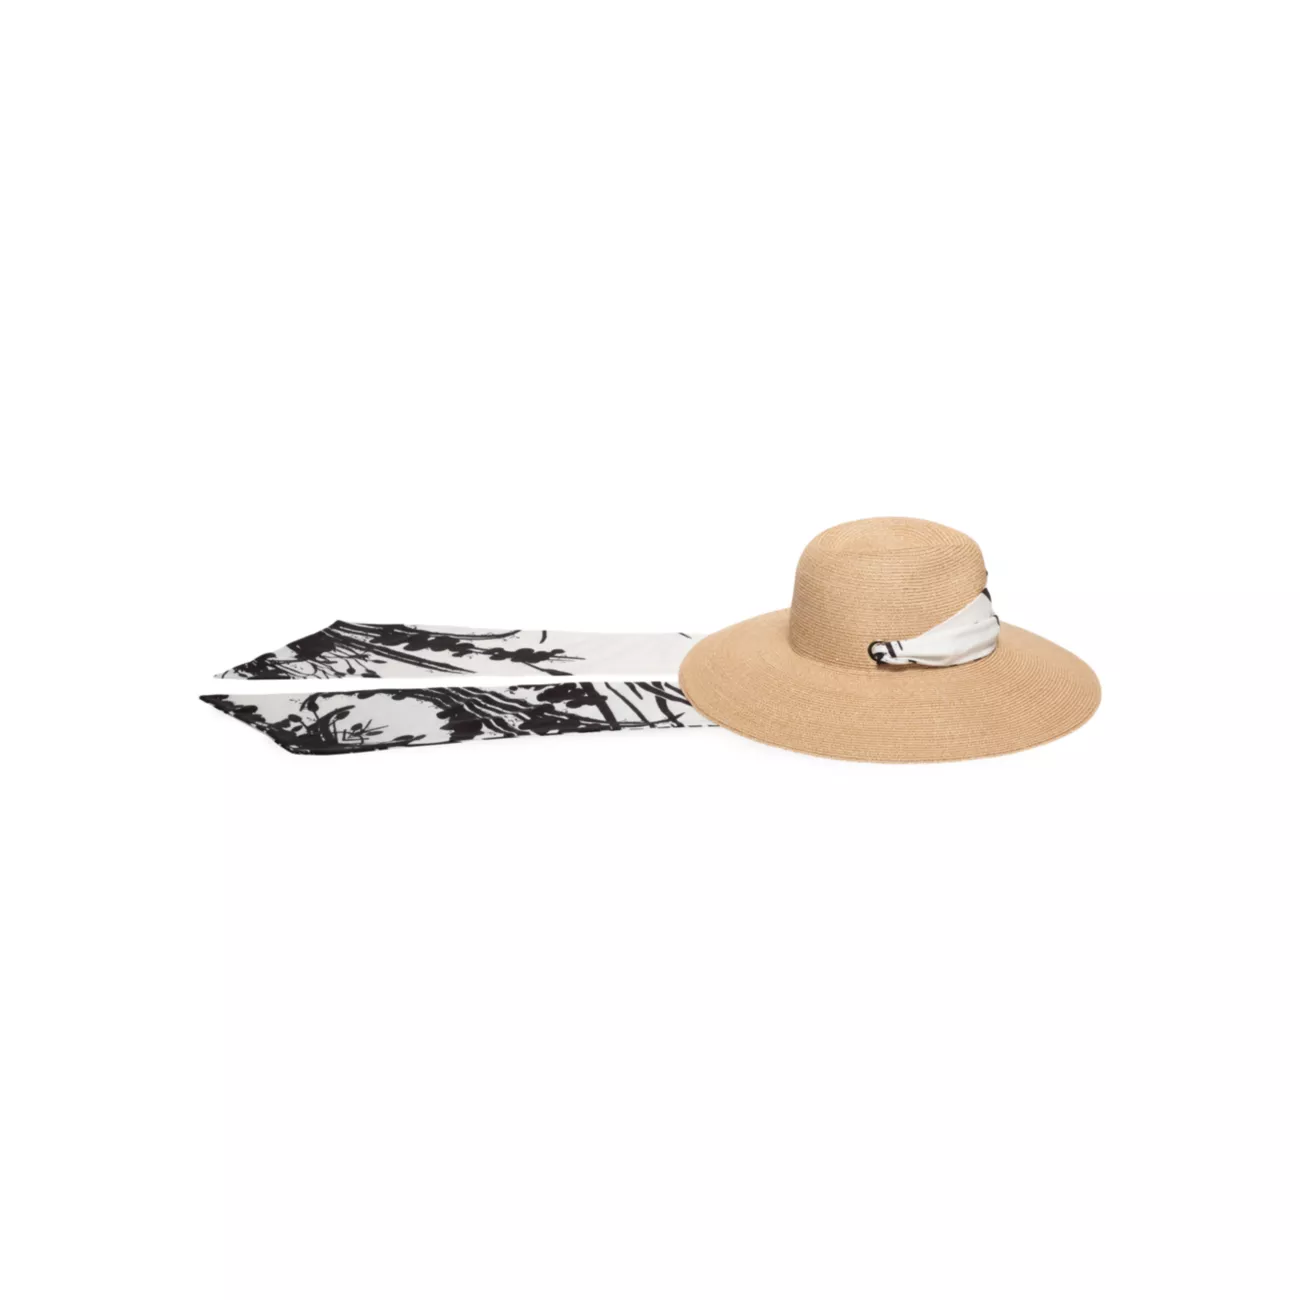 Складная шляпа-федора с широкими полями Cassidy Eugenia Kim